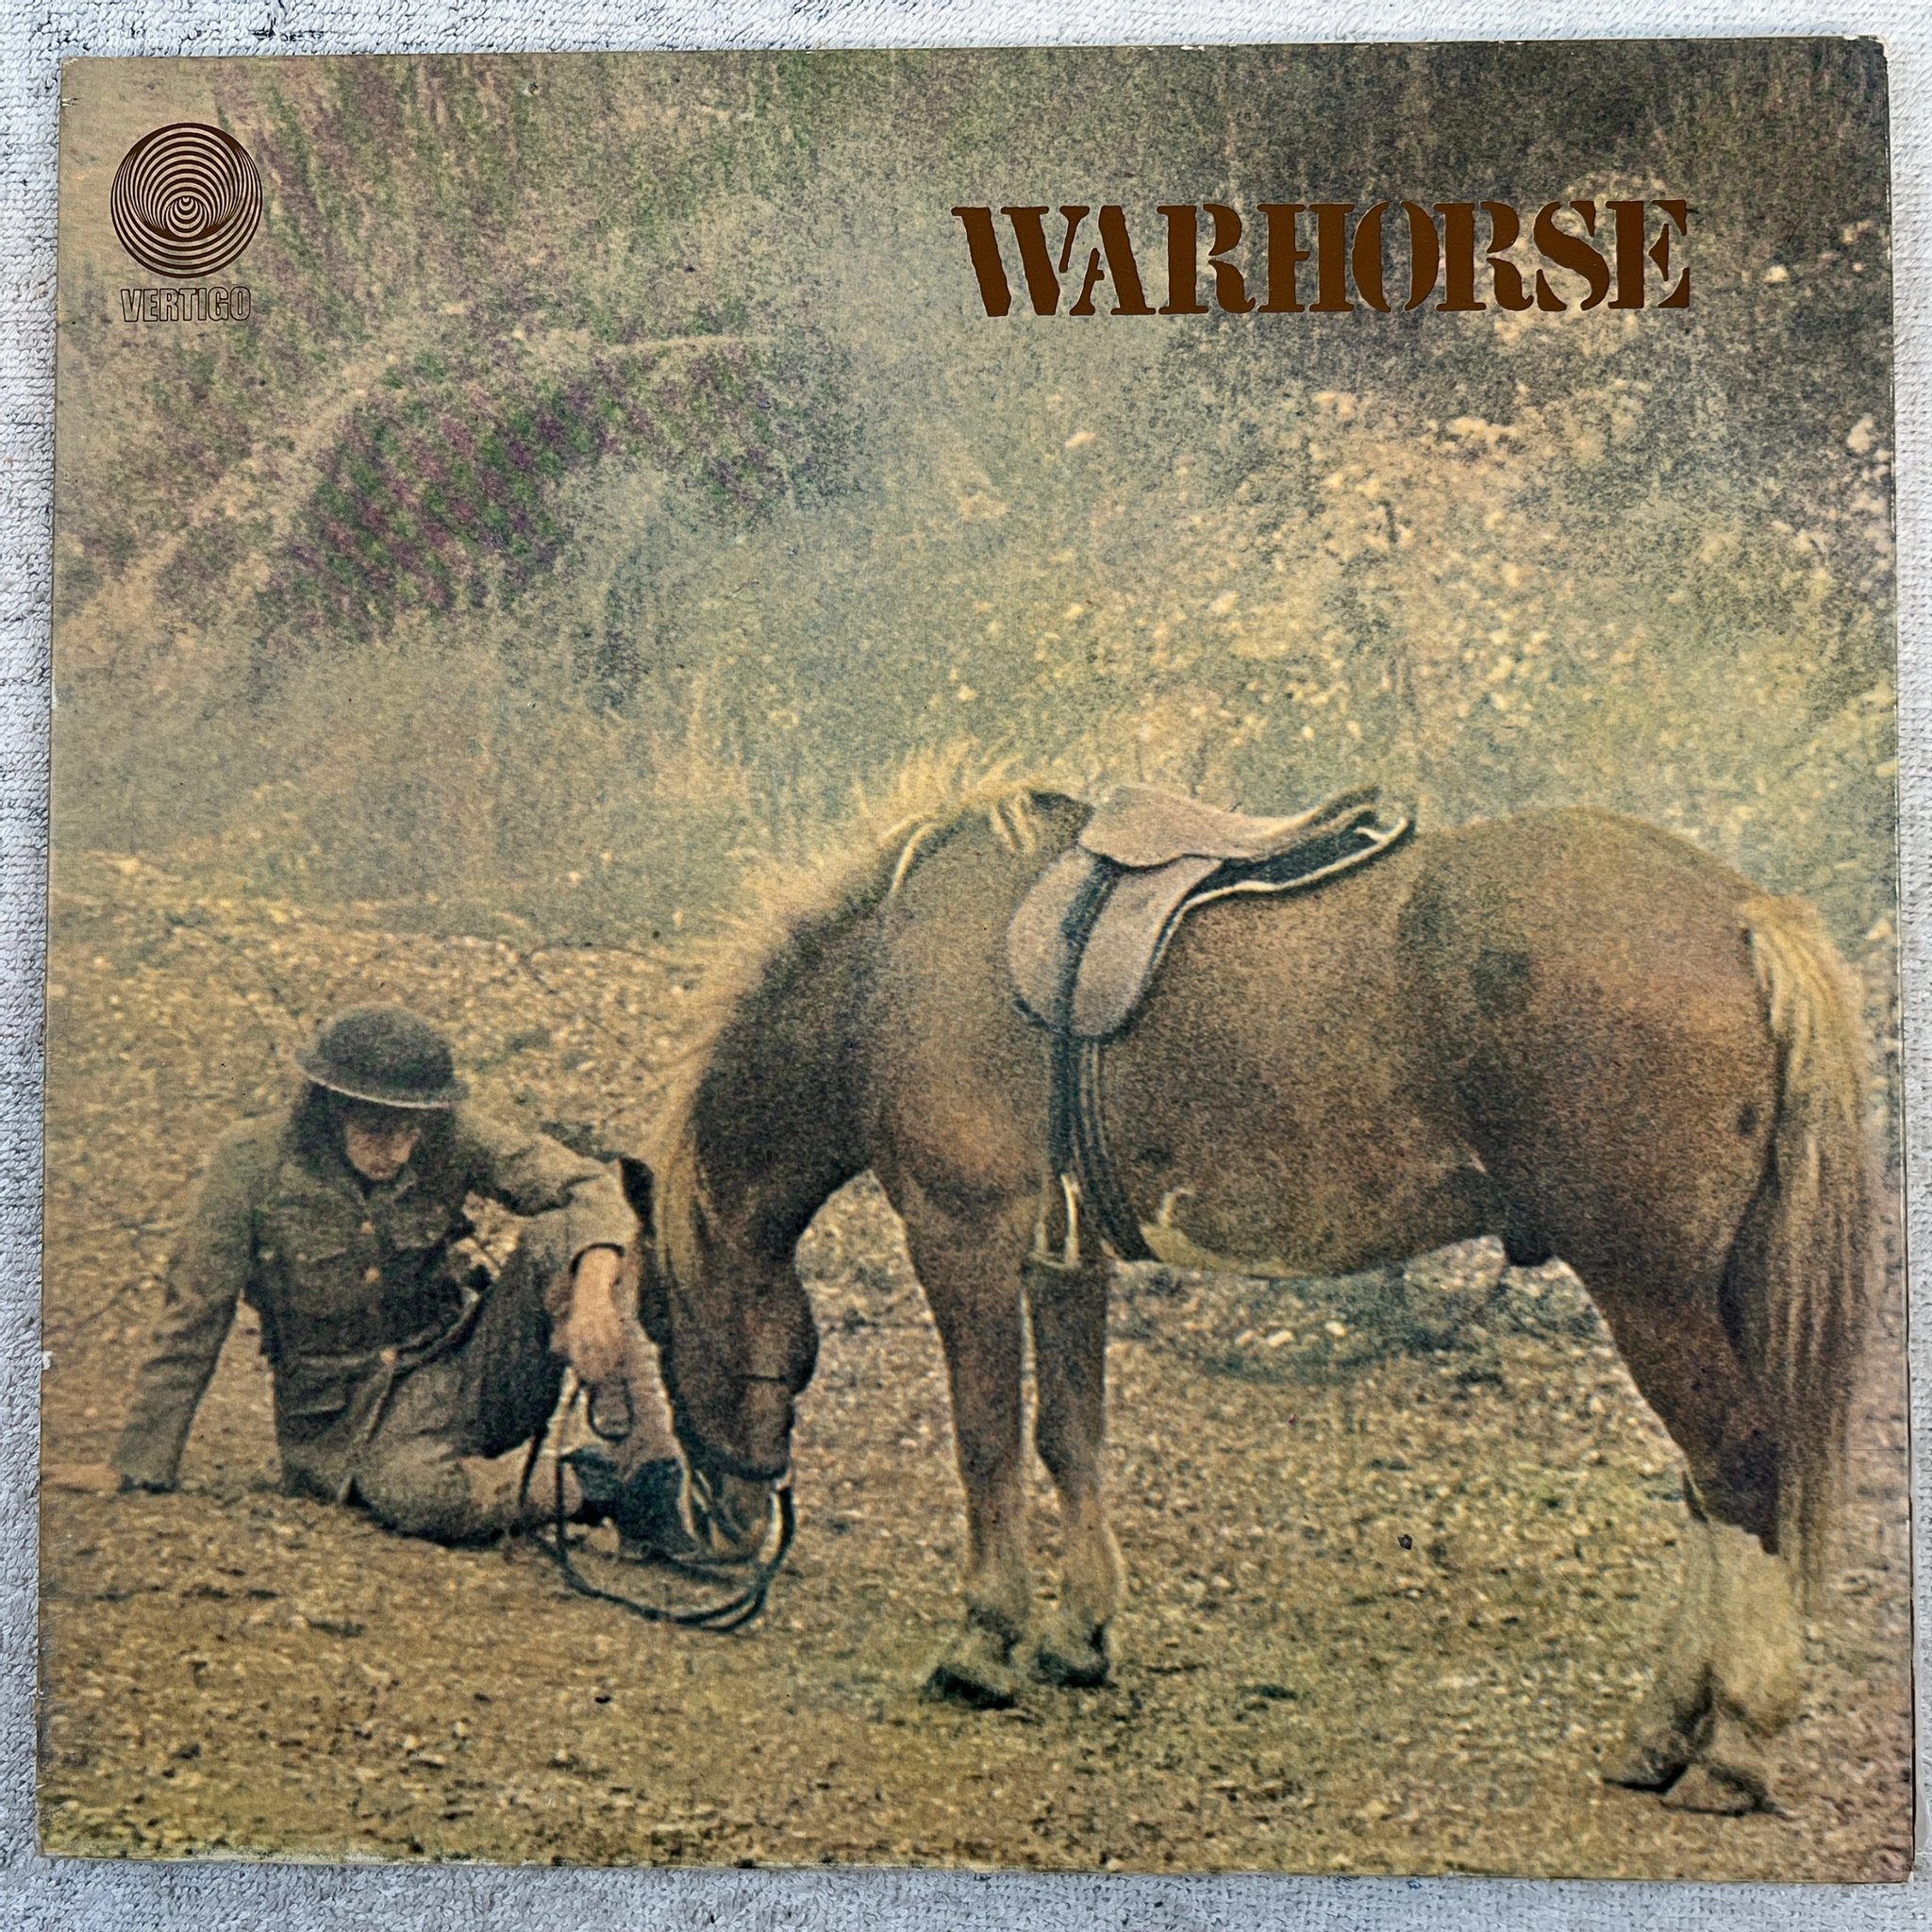 Omslagsbild för skivan WARHORSE s/t LP -70 UK VERTIGO 6360 015 hard prog ** R A R E **